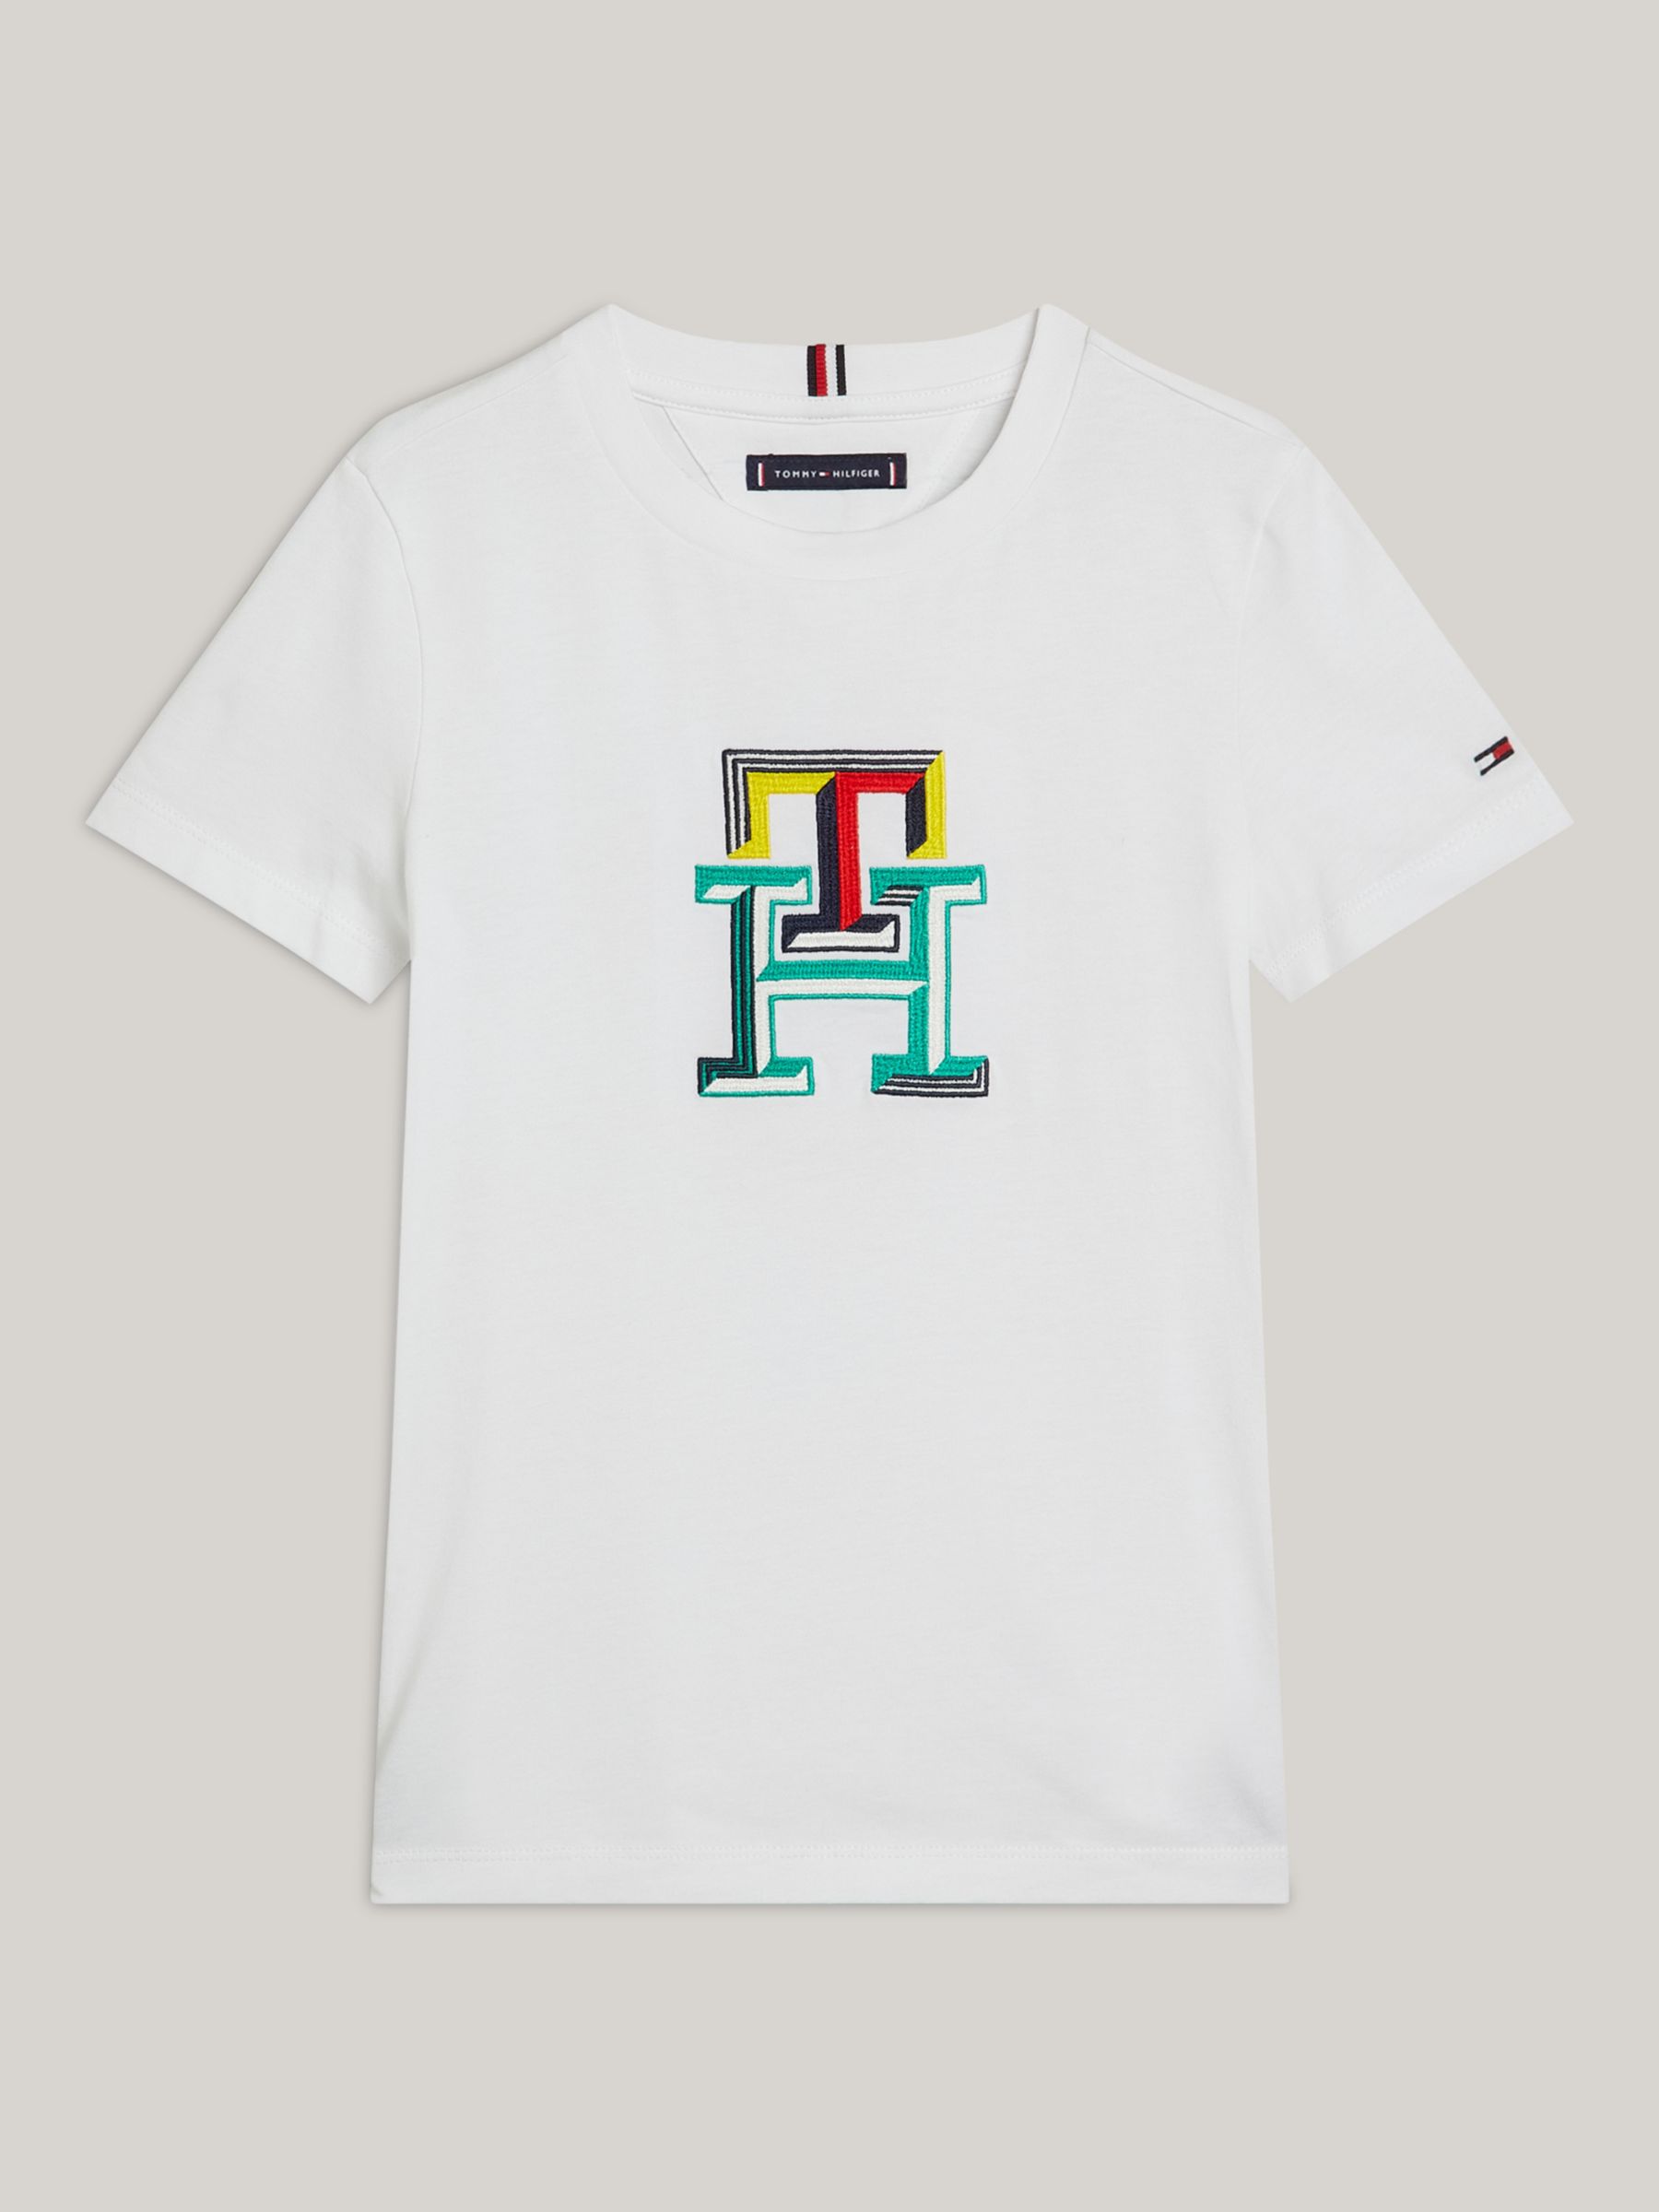 Tommy Hilfiger Kids' Cotton Monogram T-Shirt, White, 14 years